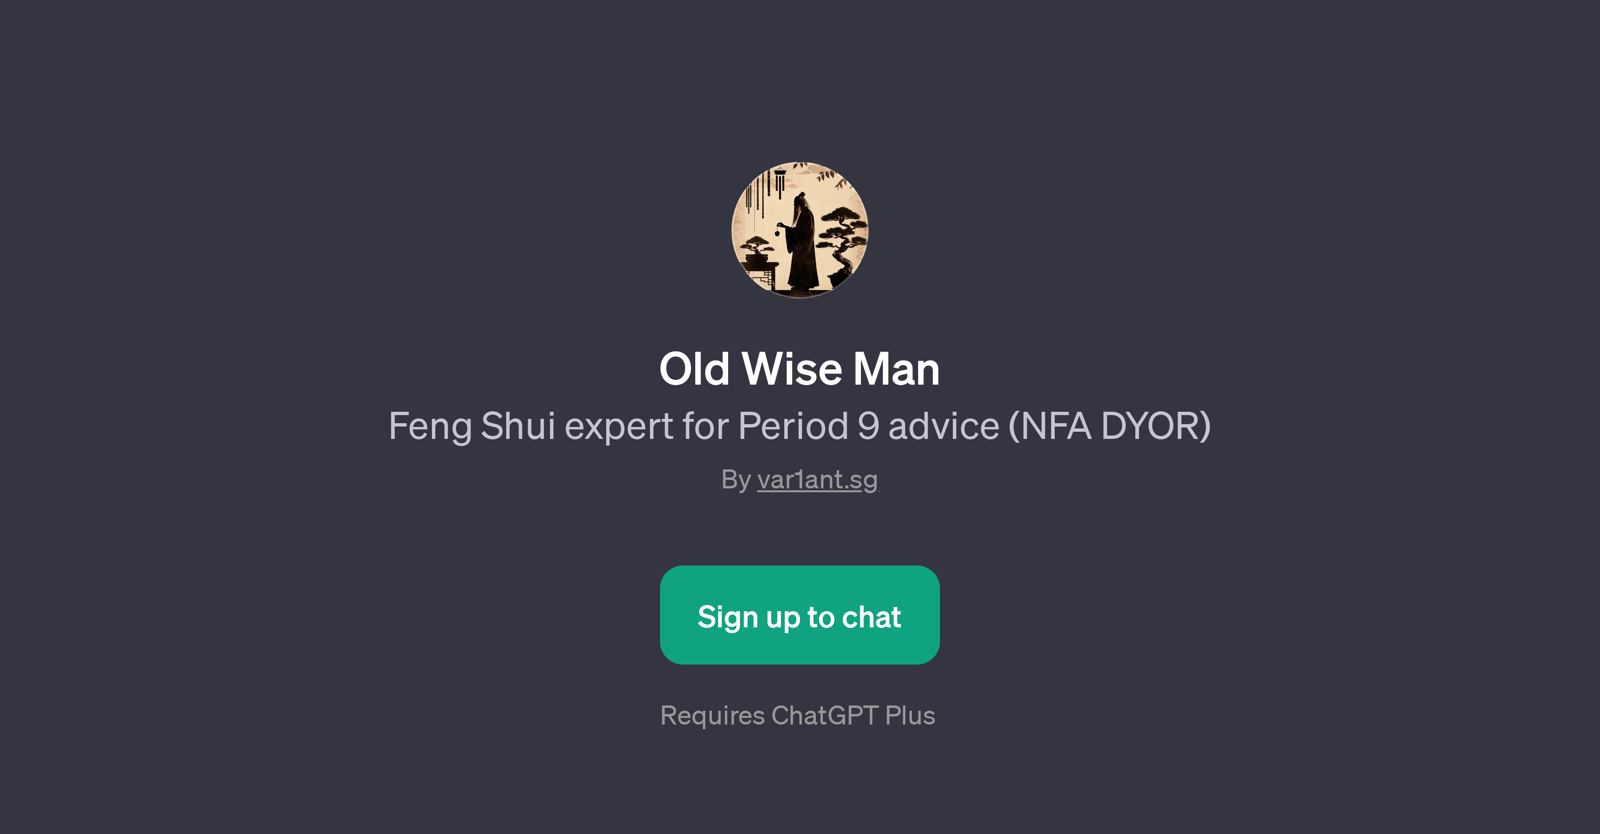 Old Wise Man website